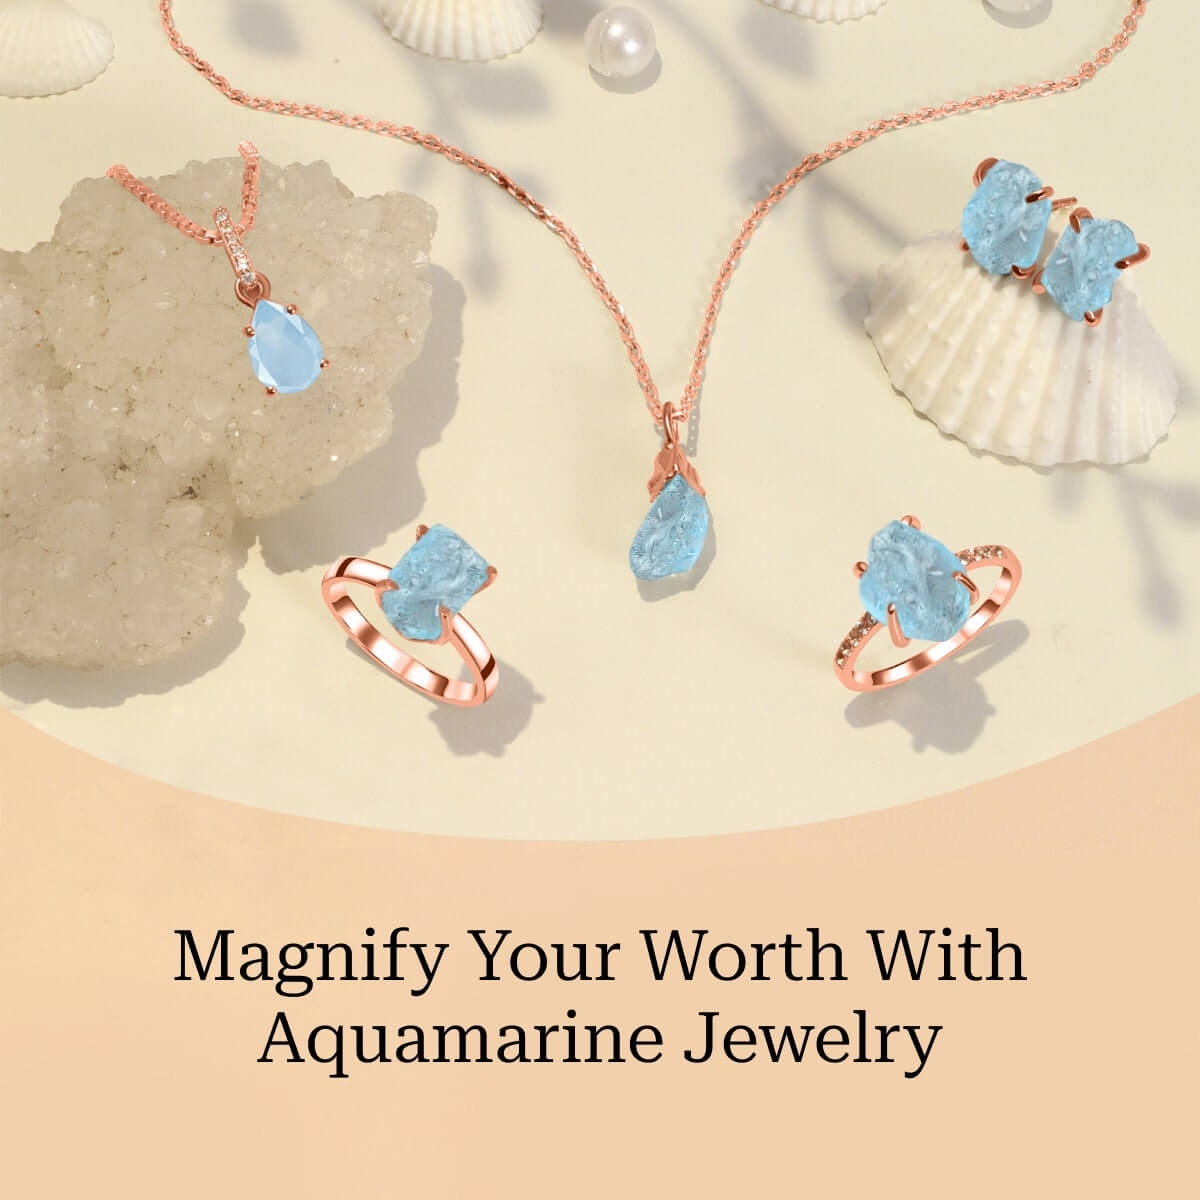 How impactful is wearing Aquamarine Jewelry